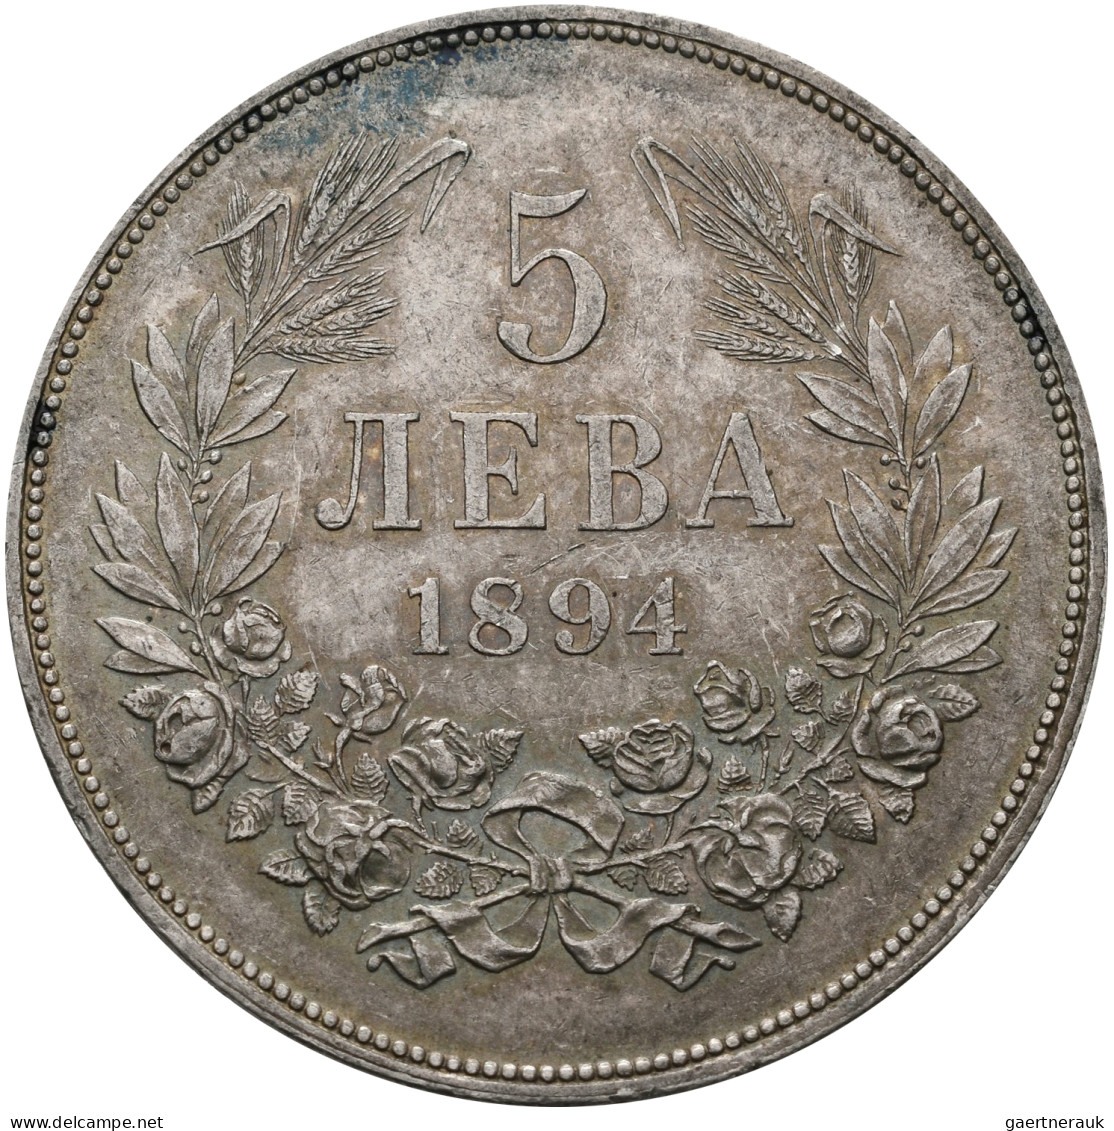 Bulgarien: Ferdinand I. 1887-1908: 5 Leva 1894, KM# 18, Fast Vorzüglich. - Bulgarien